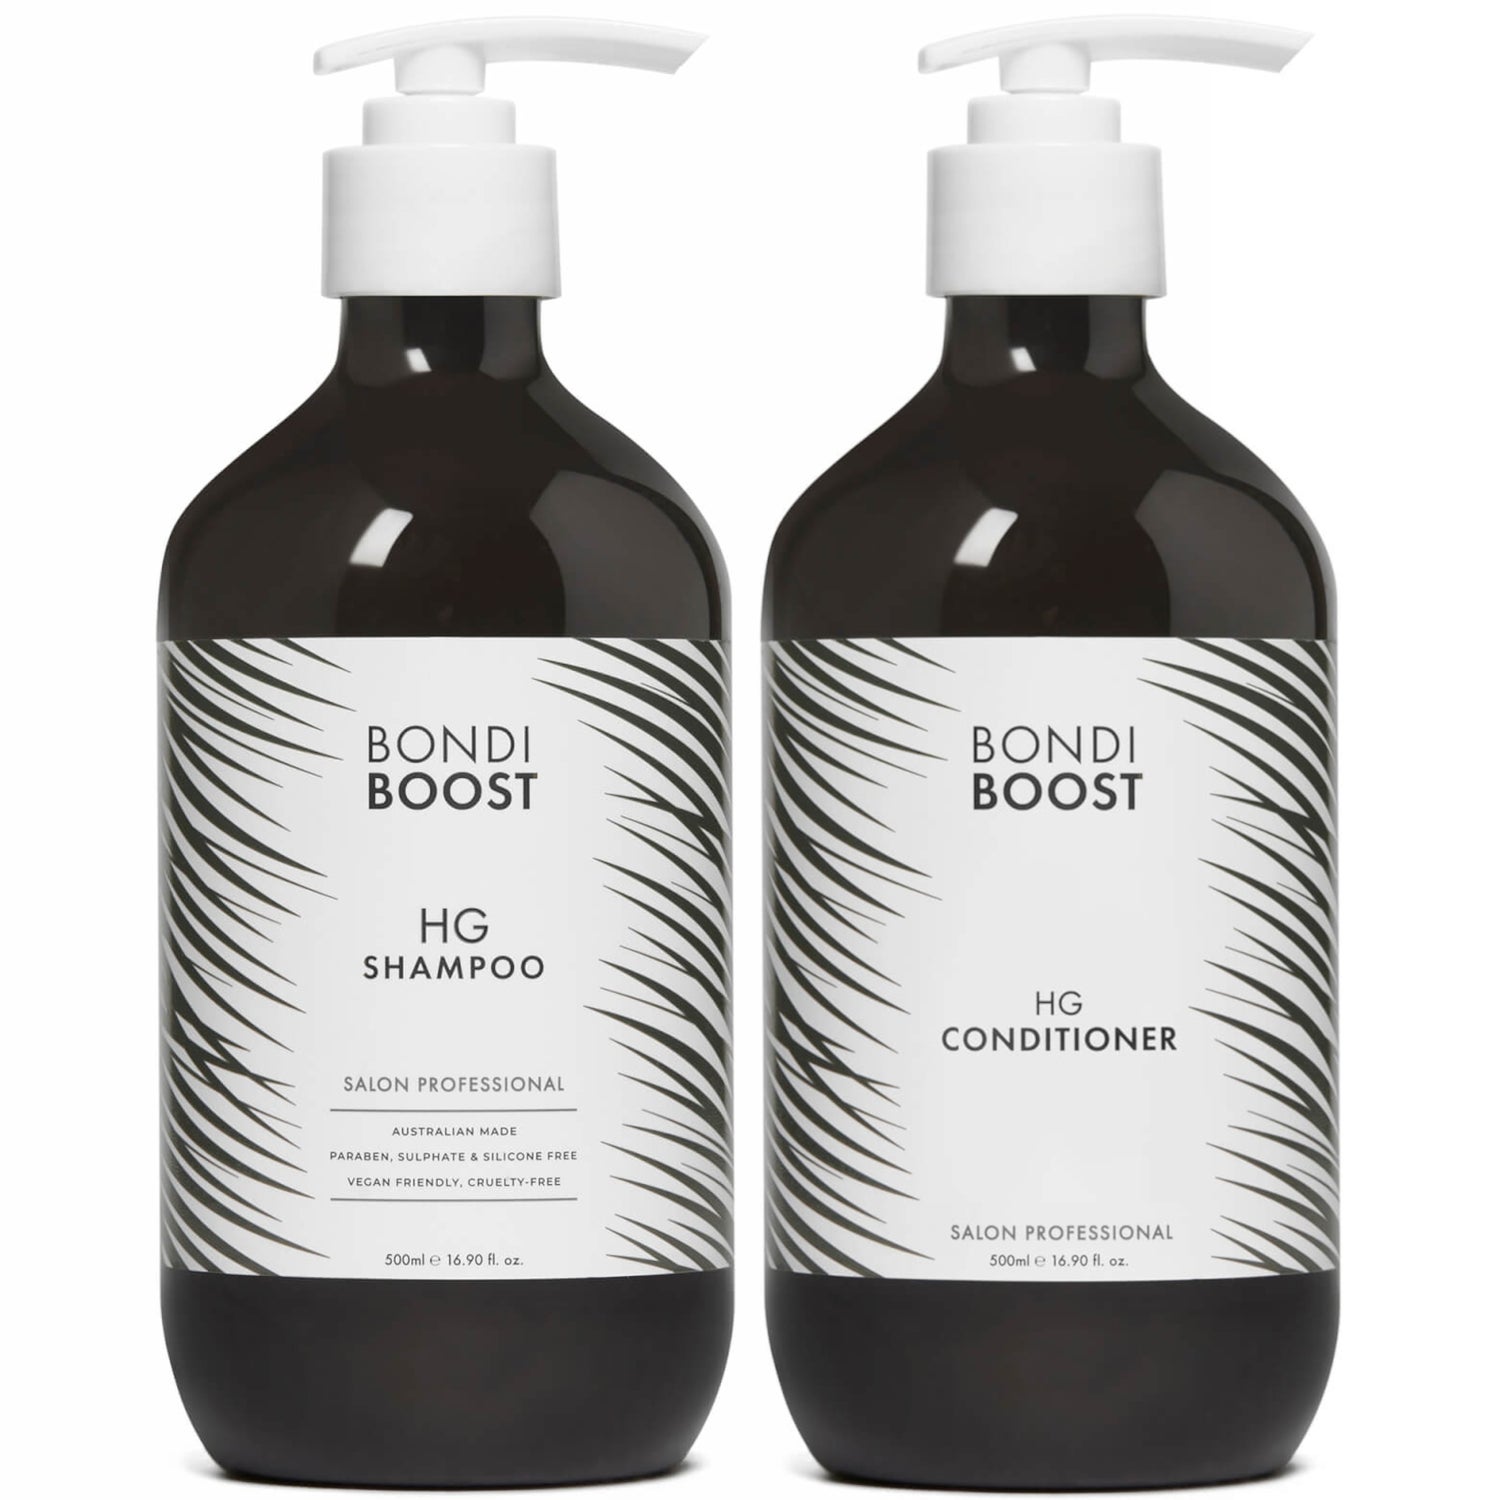 BondiBoost HG Shampoo and Conditioner 500ml Bundle